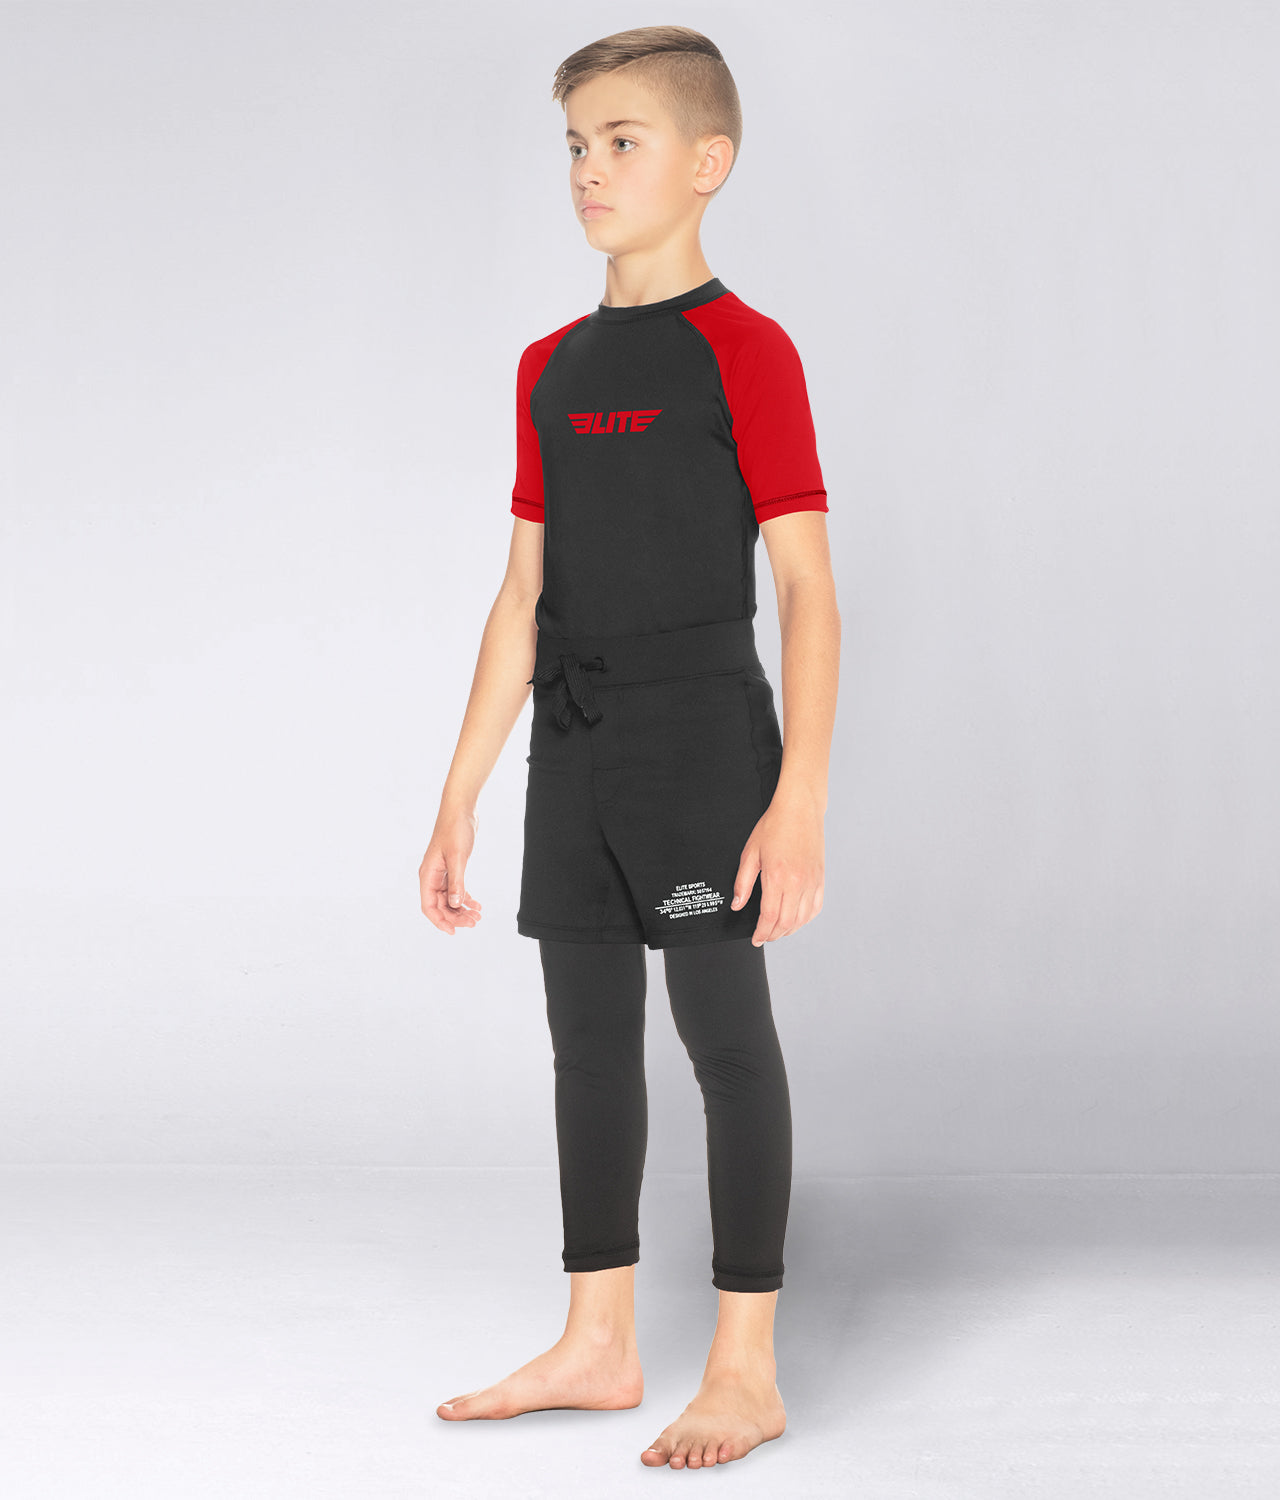 Elite Sports Kids' Standard Red Short Sleeve BJJ Rash Guard